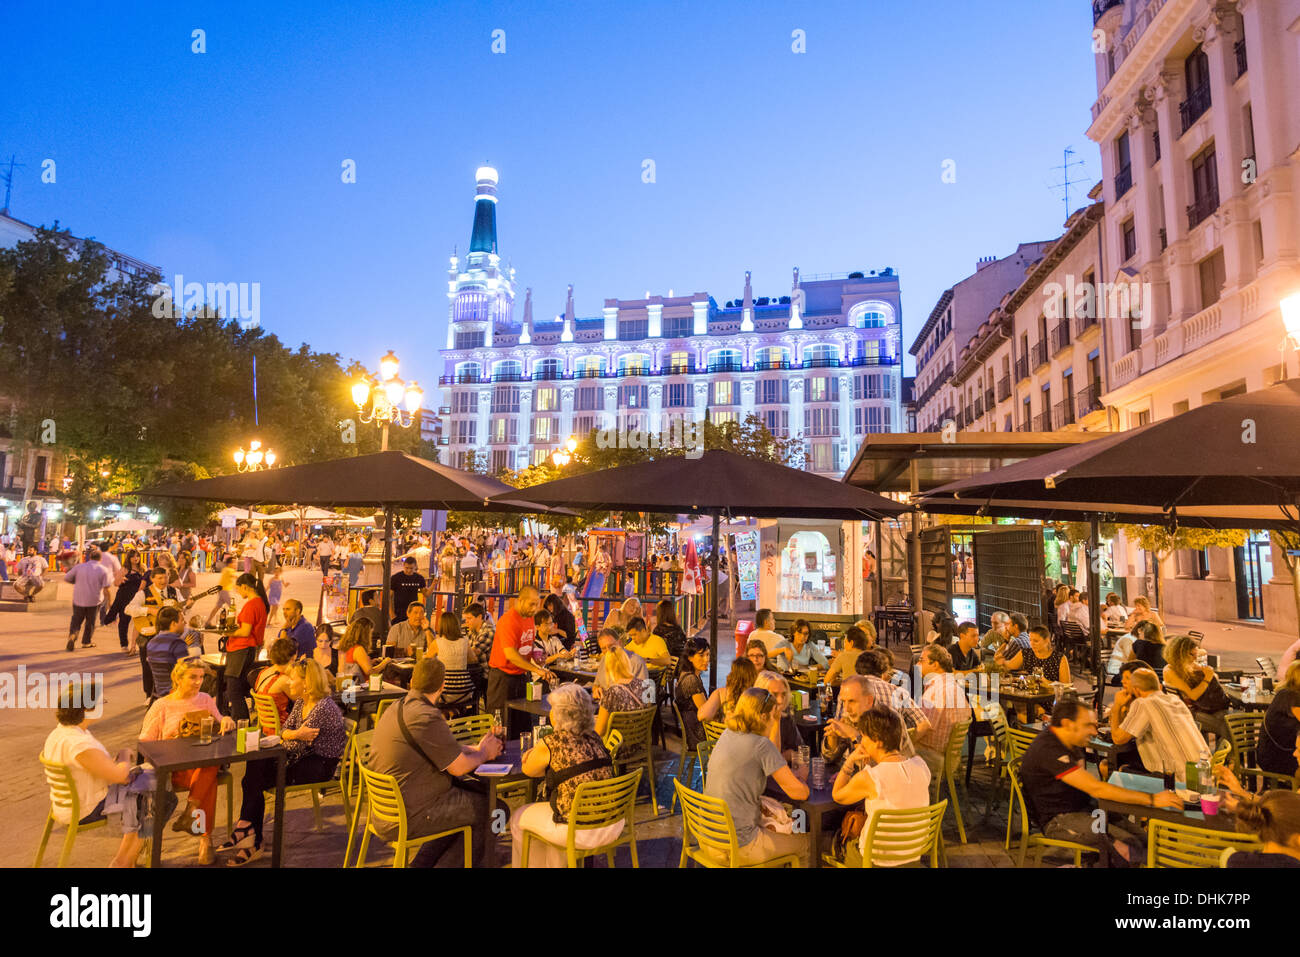 Sidewalk bars at night in Plaza Santa Ana, Huertas district, Madrid, Spain Stock Photo